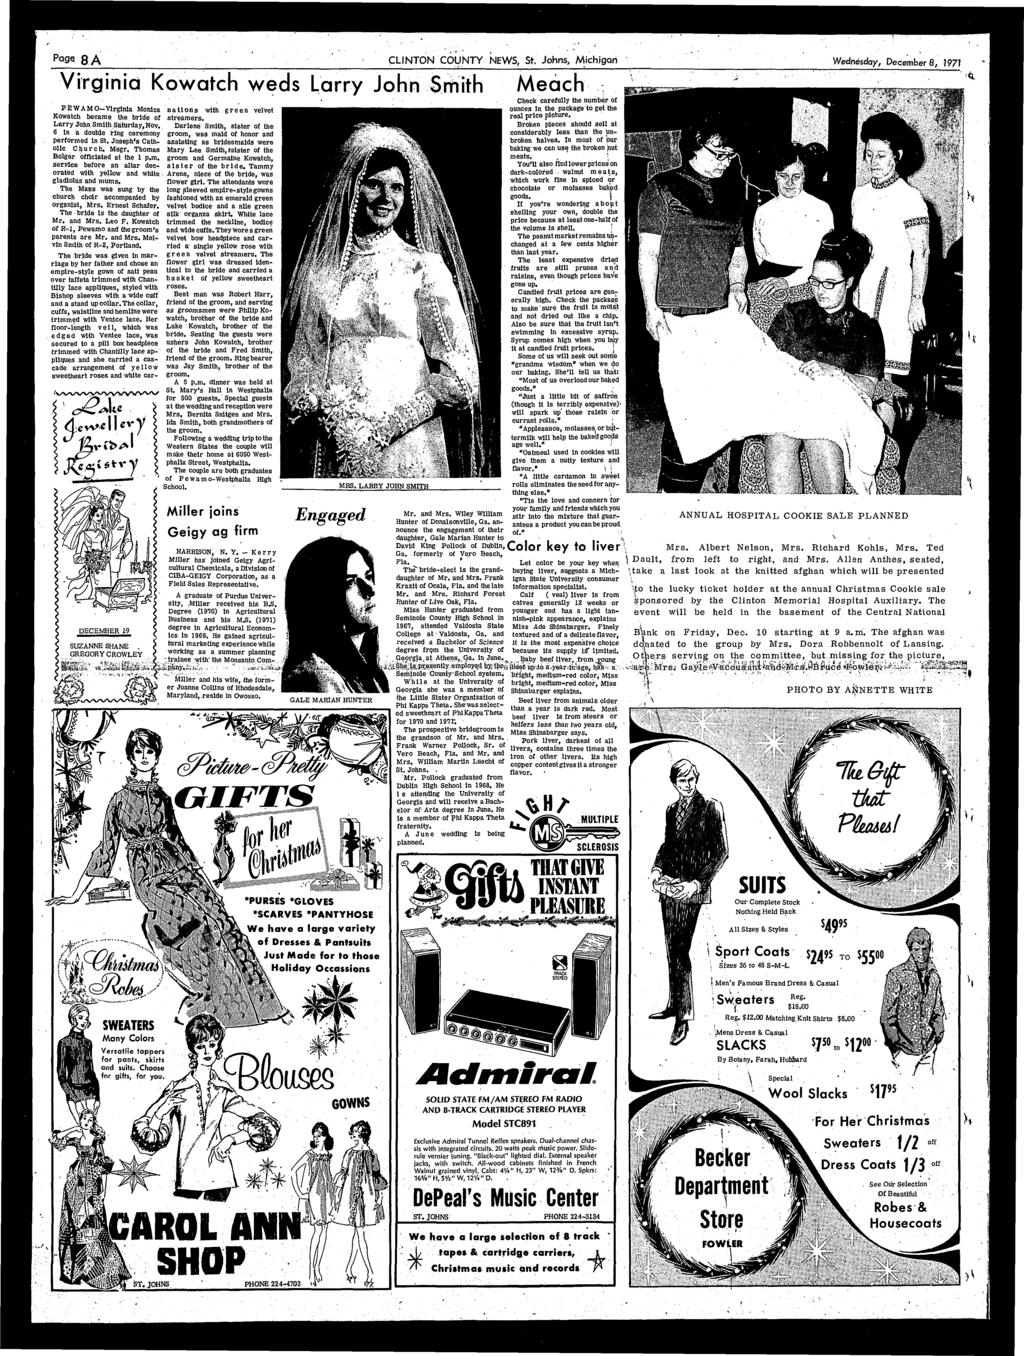 Page 8 A CLNTON COUNTY NEWS, St Johns, Mchgan Wednesday, December 8, 1971 Vrgna Kowatch weds Larry John Snfth PEWAMO-Vlrglnla Monca Kowatch became the brde of Larry John Smth Saturday, Nov.